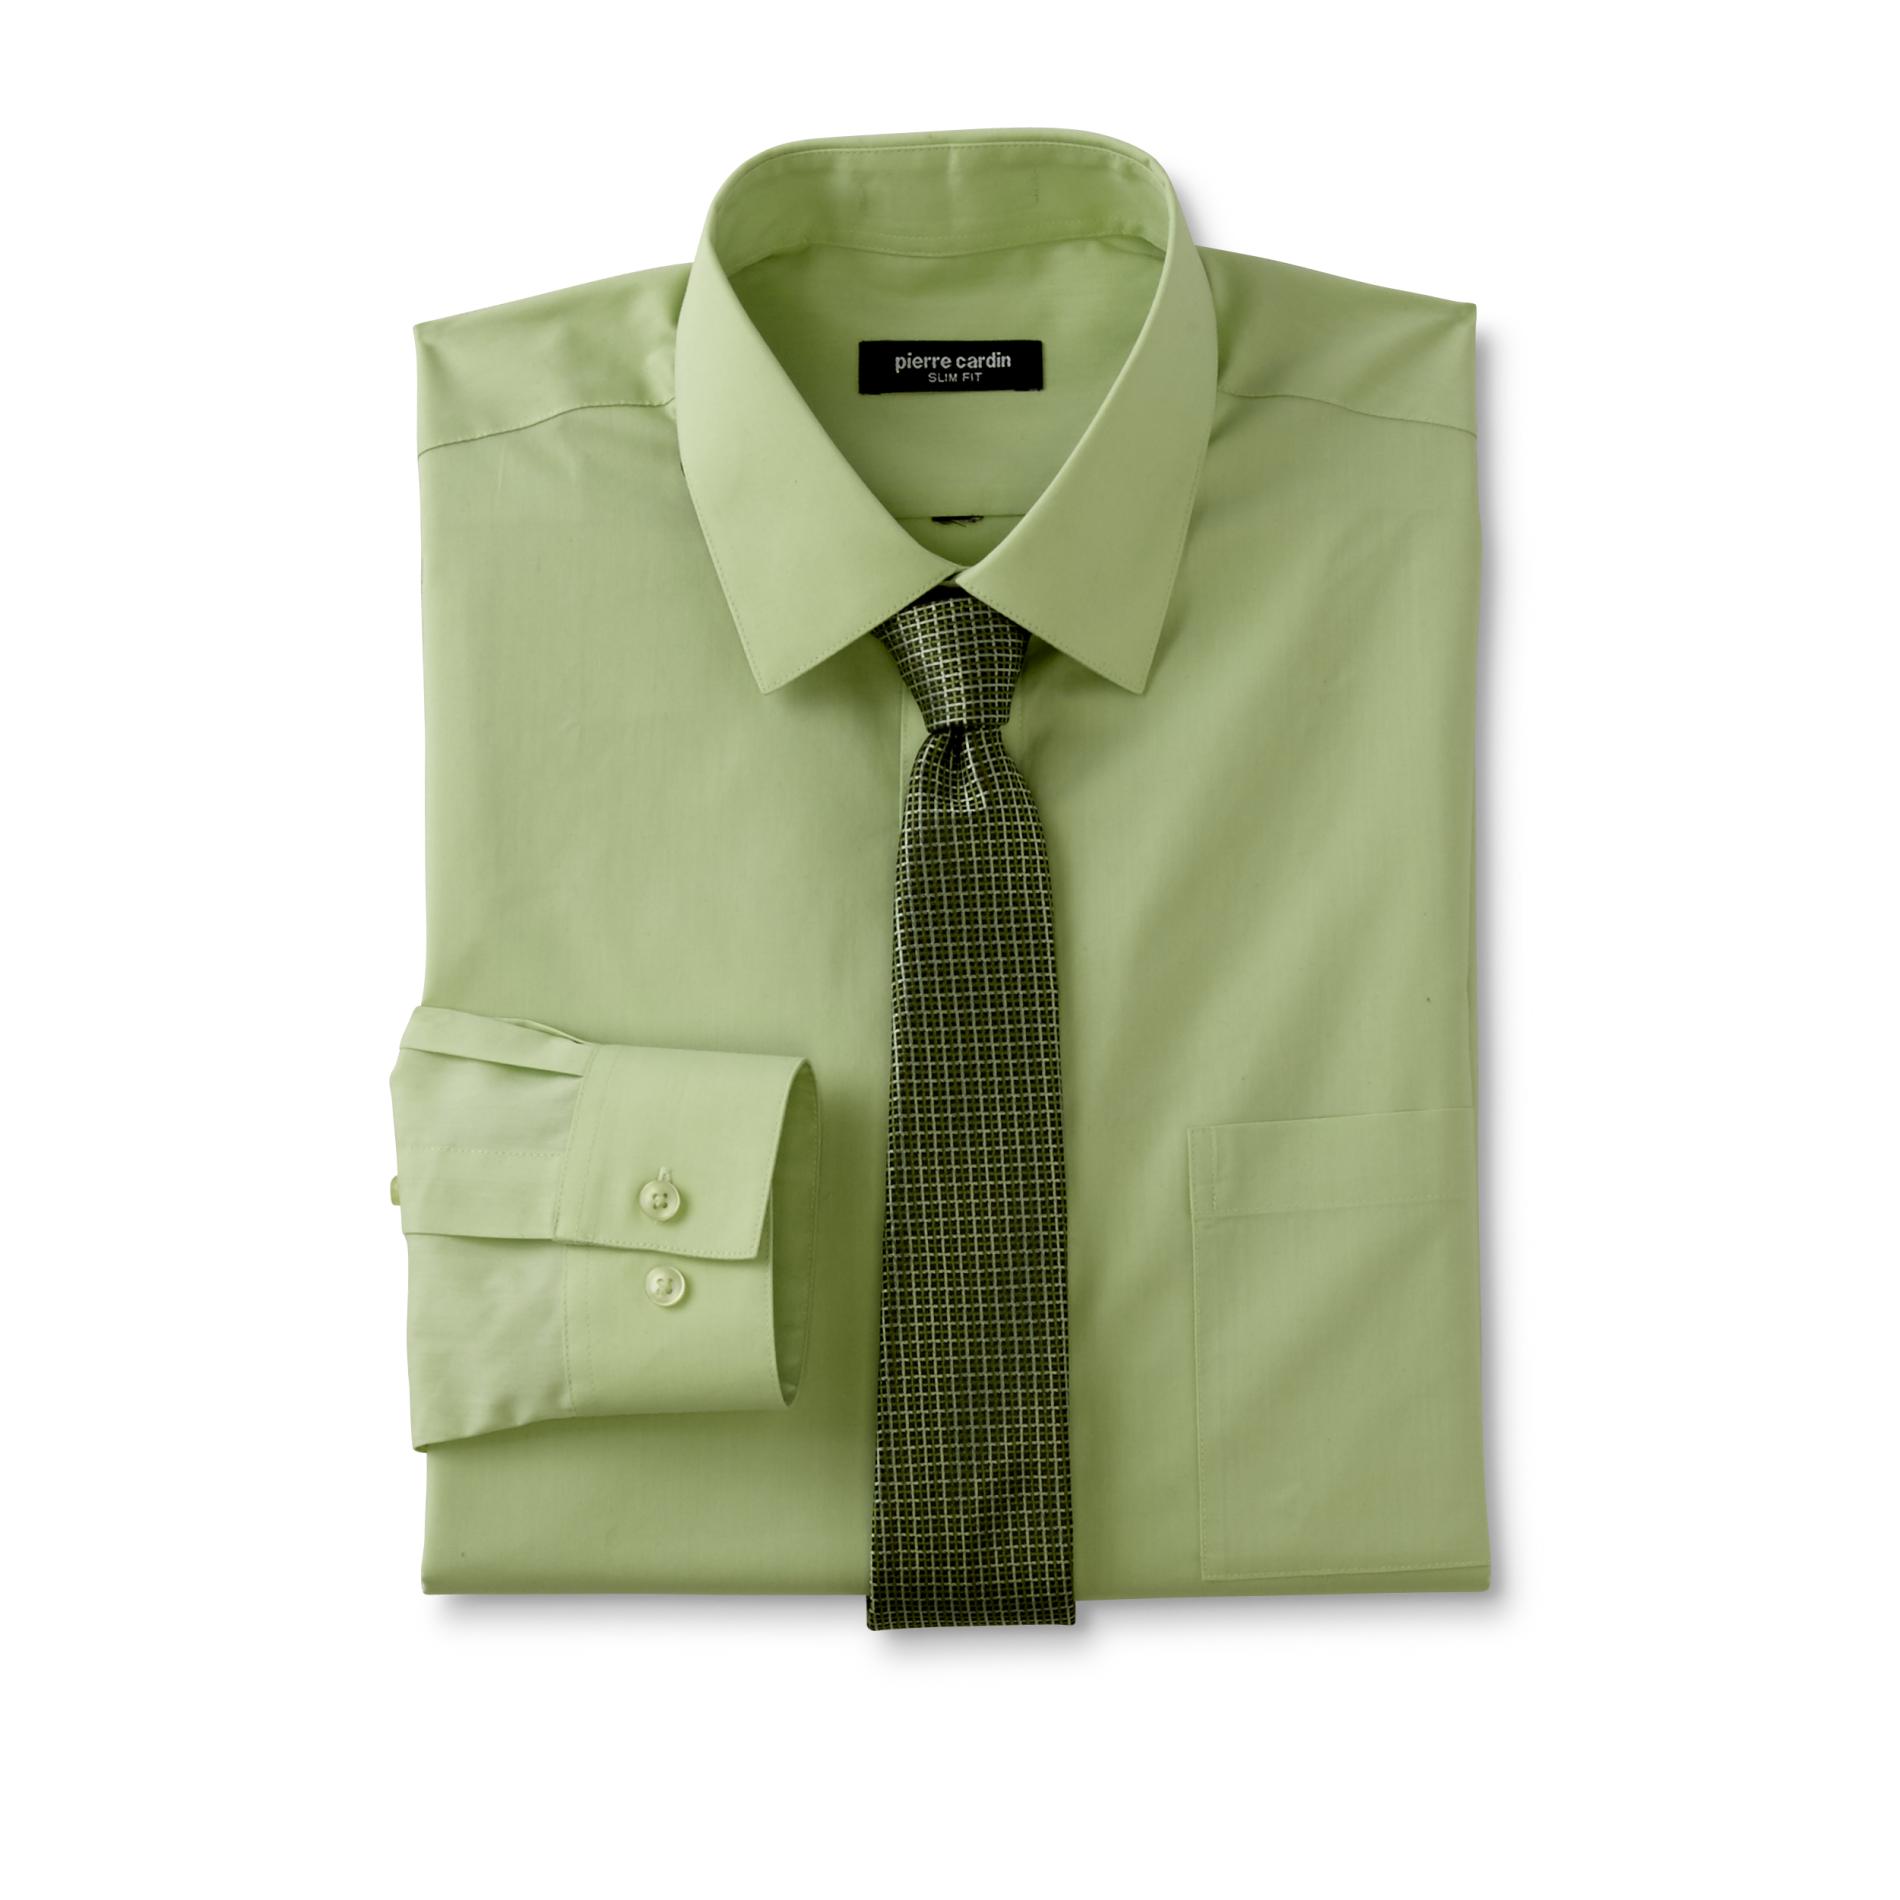 Pierre Cardin Men's Slim Fit Dress Shirt & Tie - Geometric